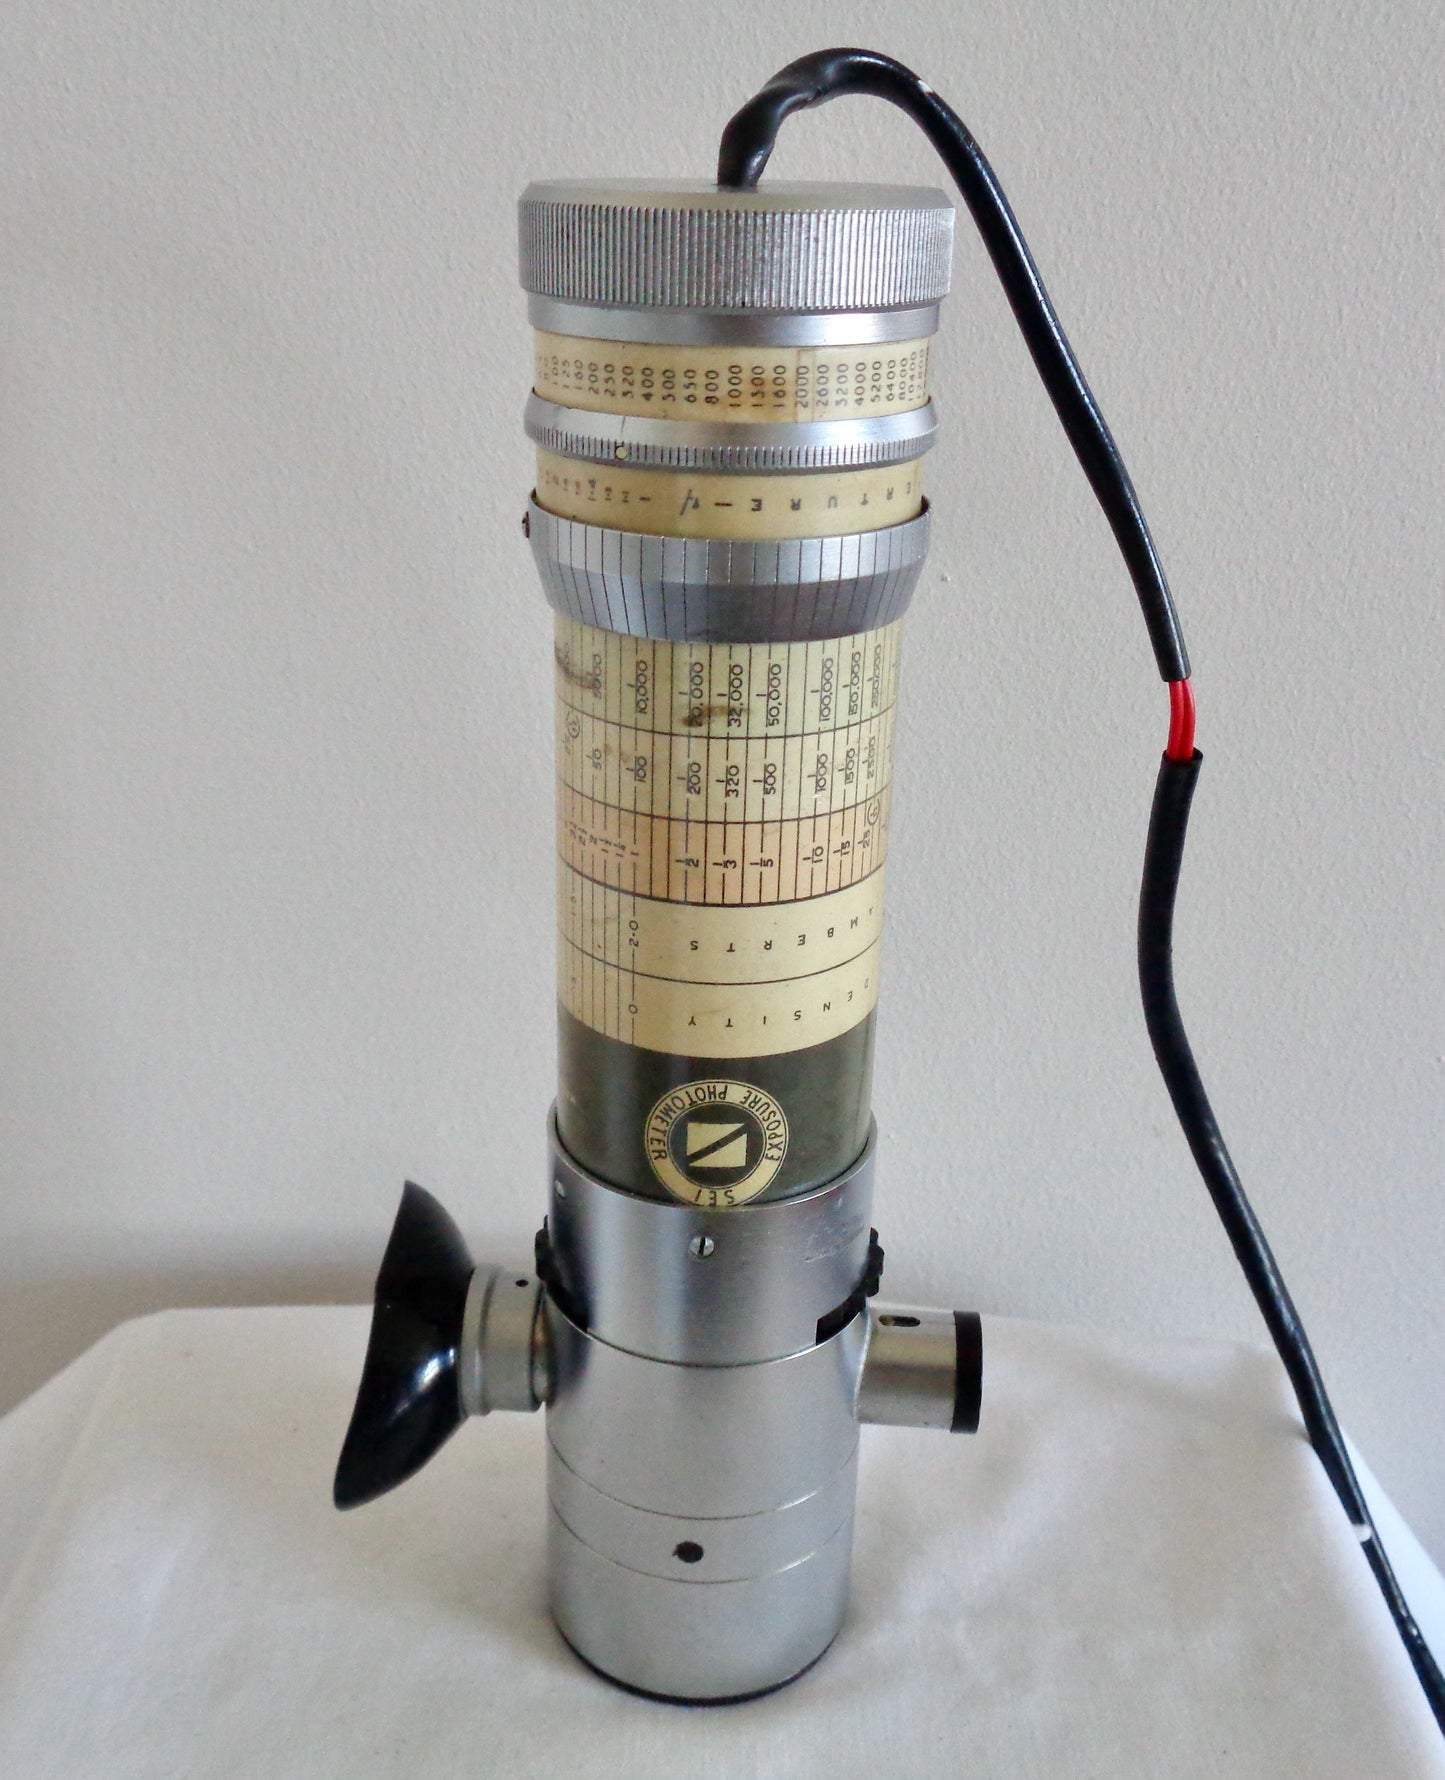 1950s SEI Photographic Exposure Spot Photometer